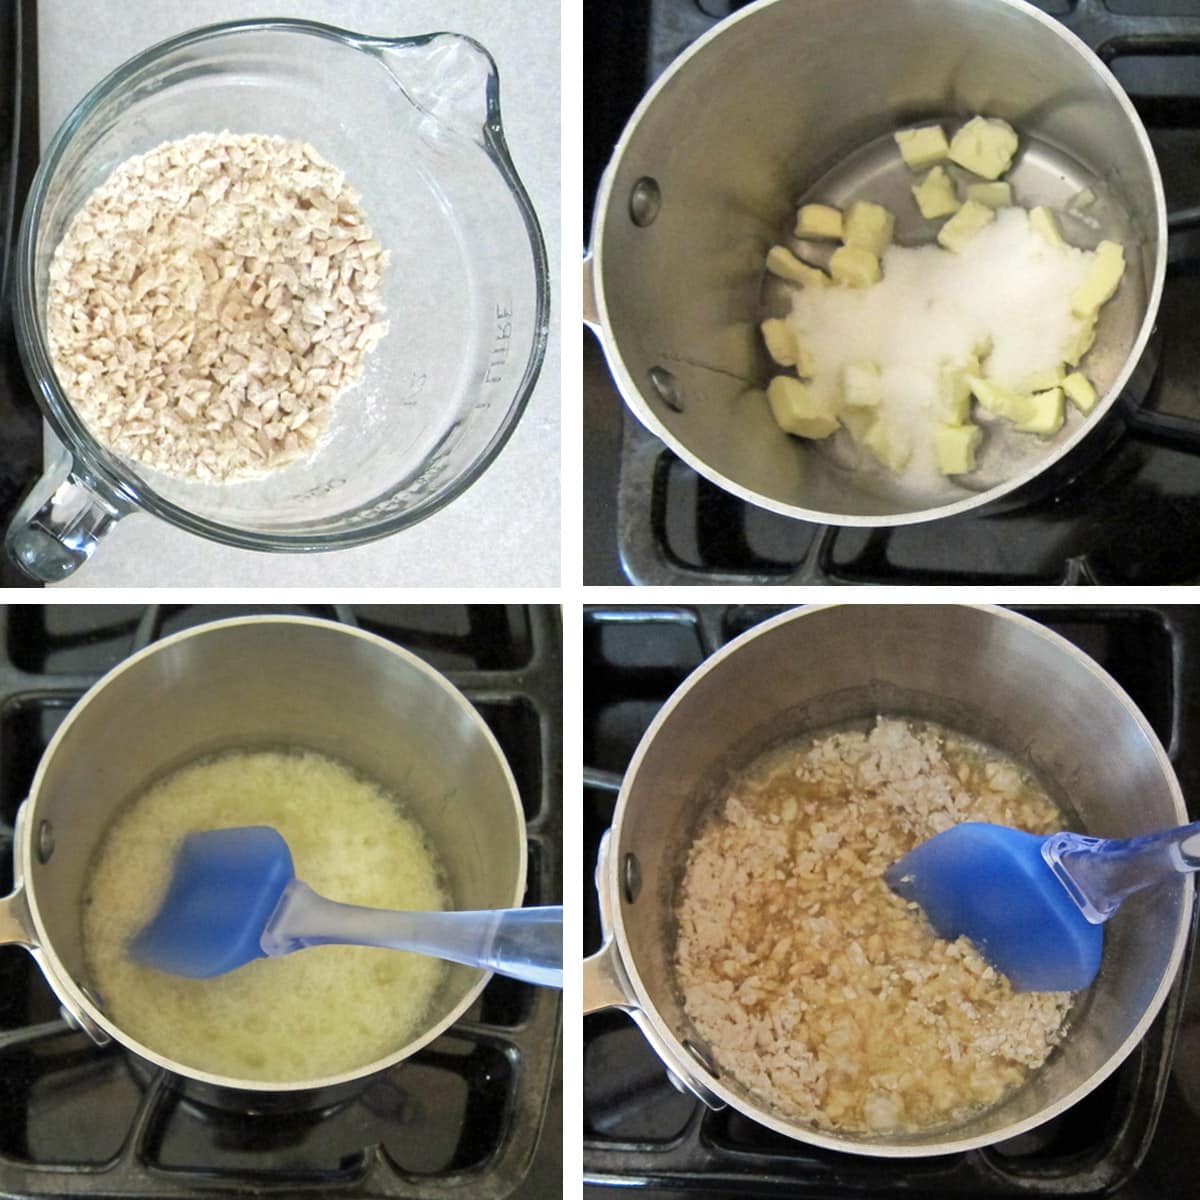 making almond nougatine on the stove.